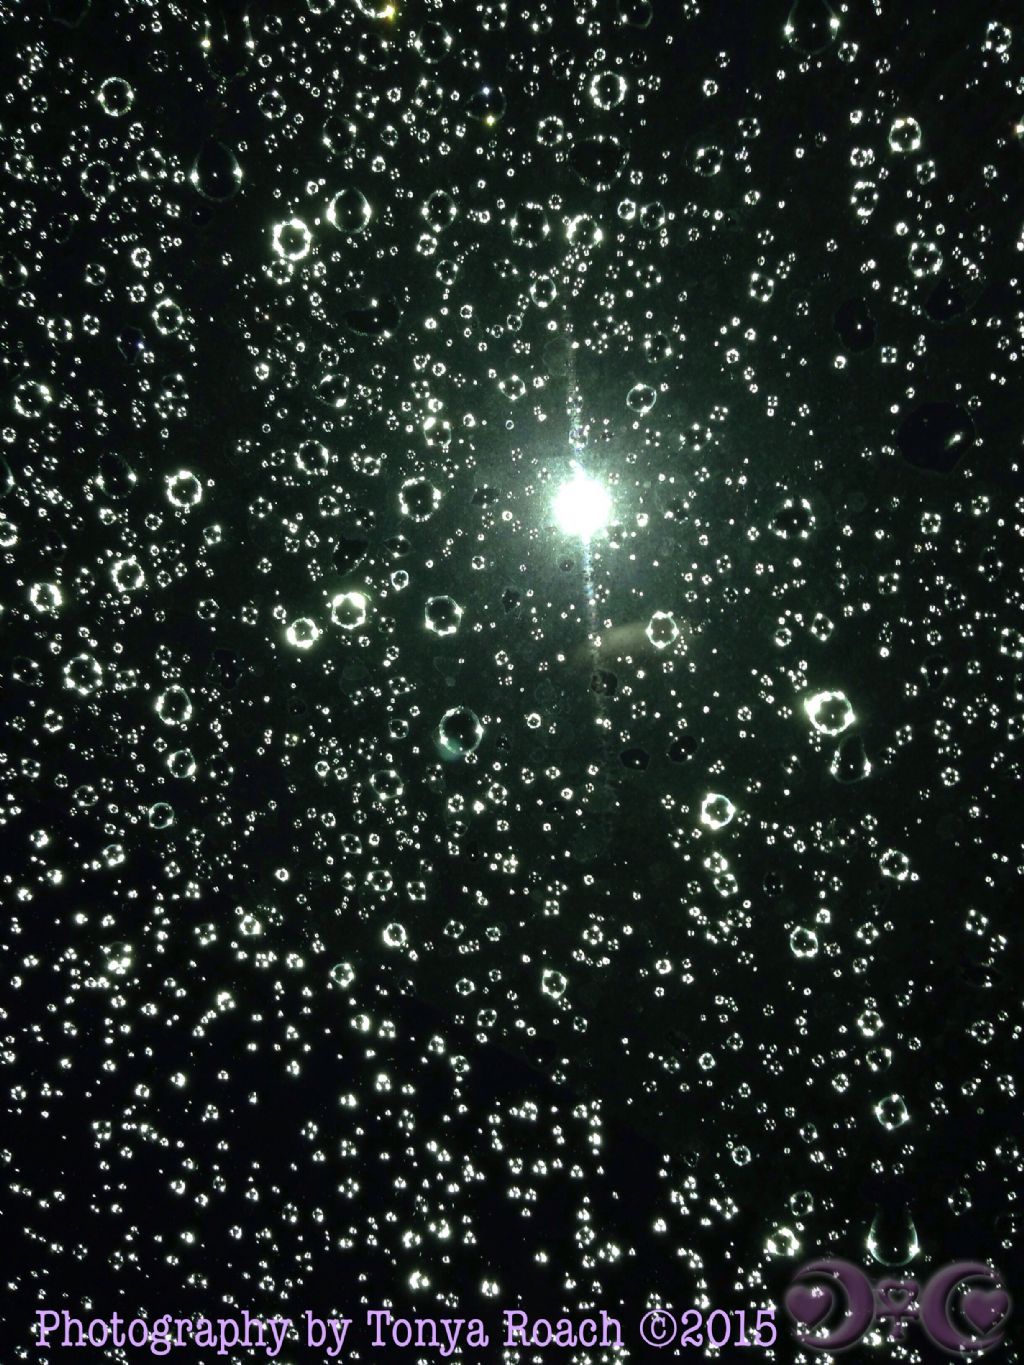 Rain Droplets on Glass at Night